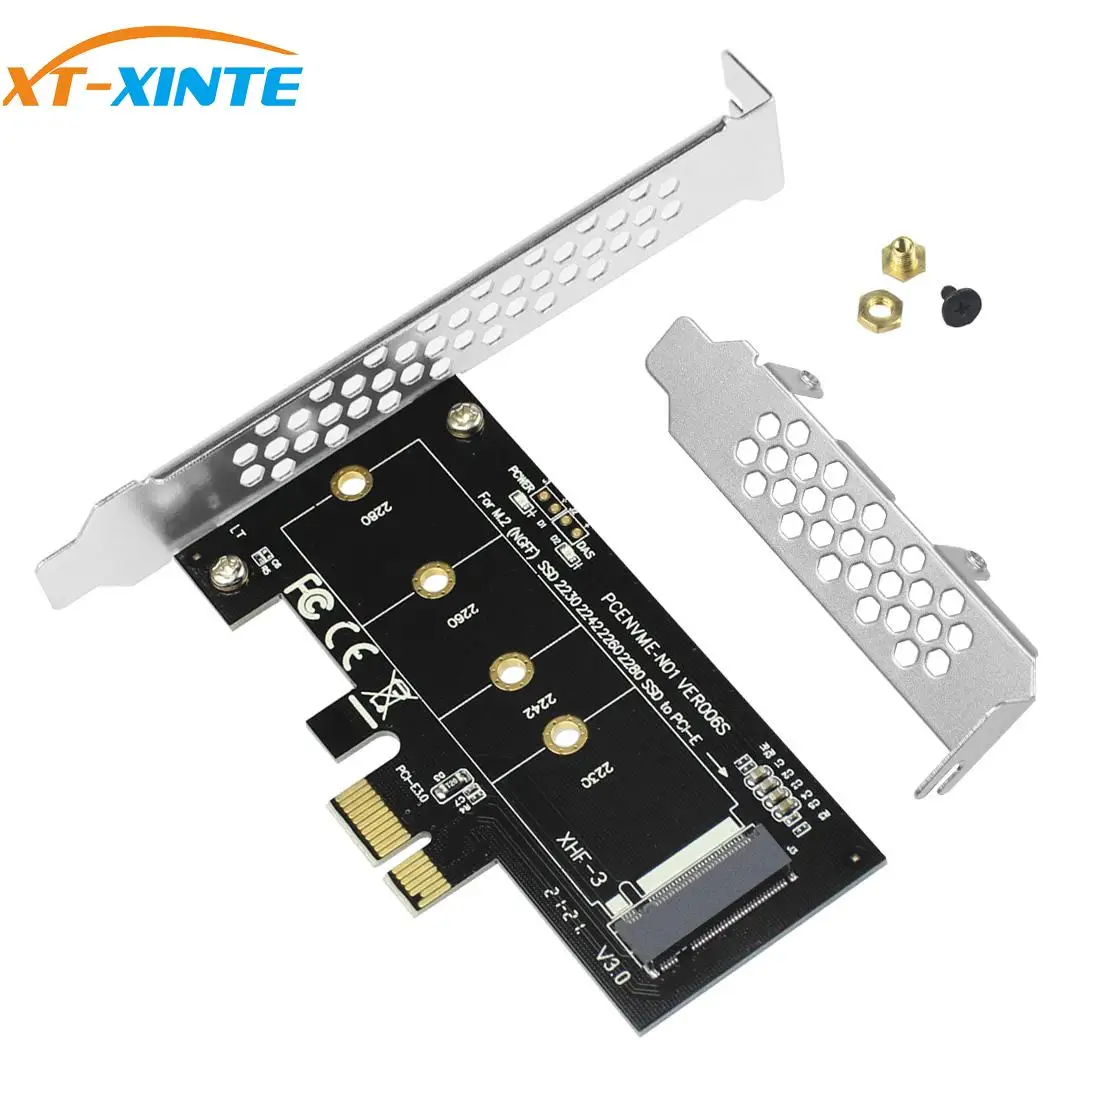 

XT-XINTE M.2 ключ M Адаптер карта PCI Express 3,0 1X плата расширения конвертер переходная карта для M2 NVMe 2230 2242 2260 2280 Размер SSD